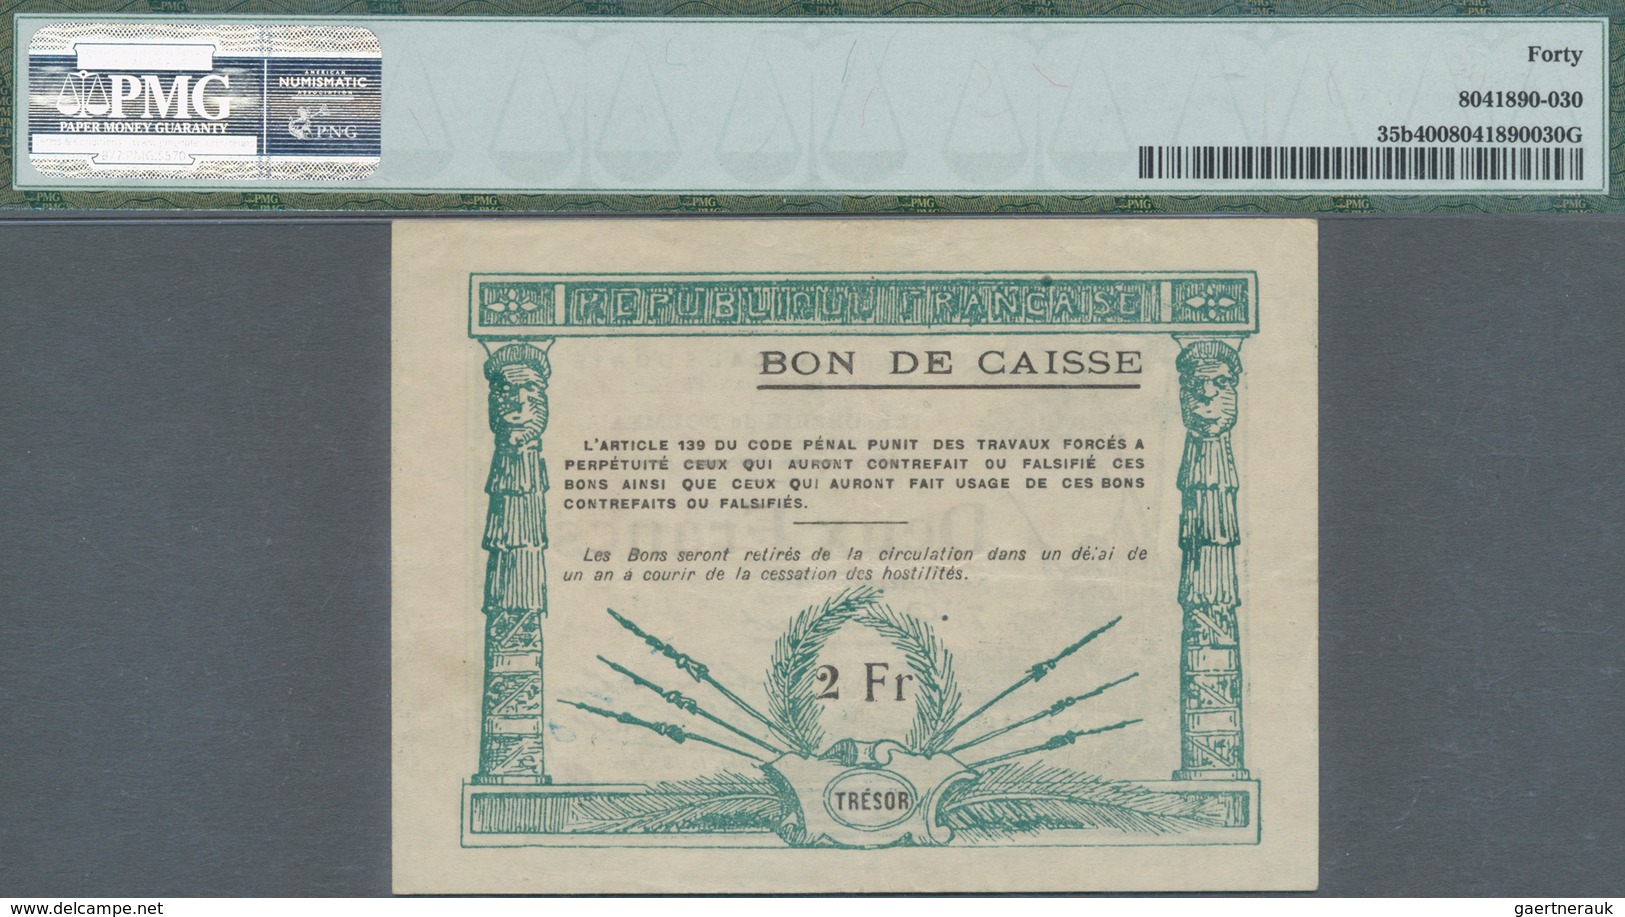 New Caledonia / Neu Kaledonien: Trésorerie De Nouméa, Highly Rare Set With 3 Banknotes Of The 1918-1 - Nouvelle-Calédonie 1873-1985